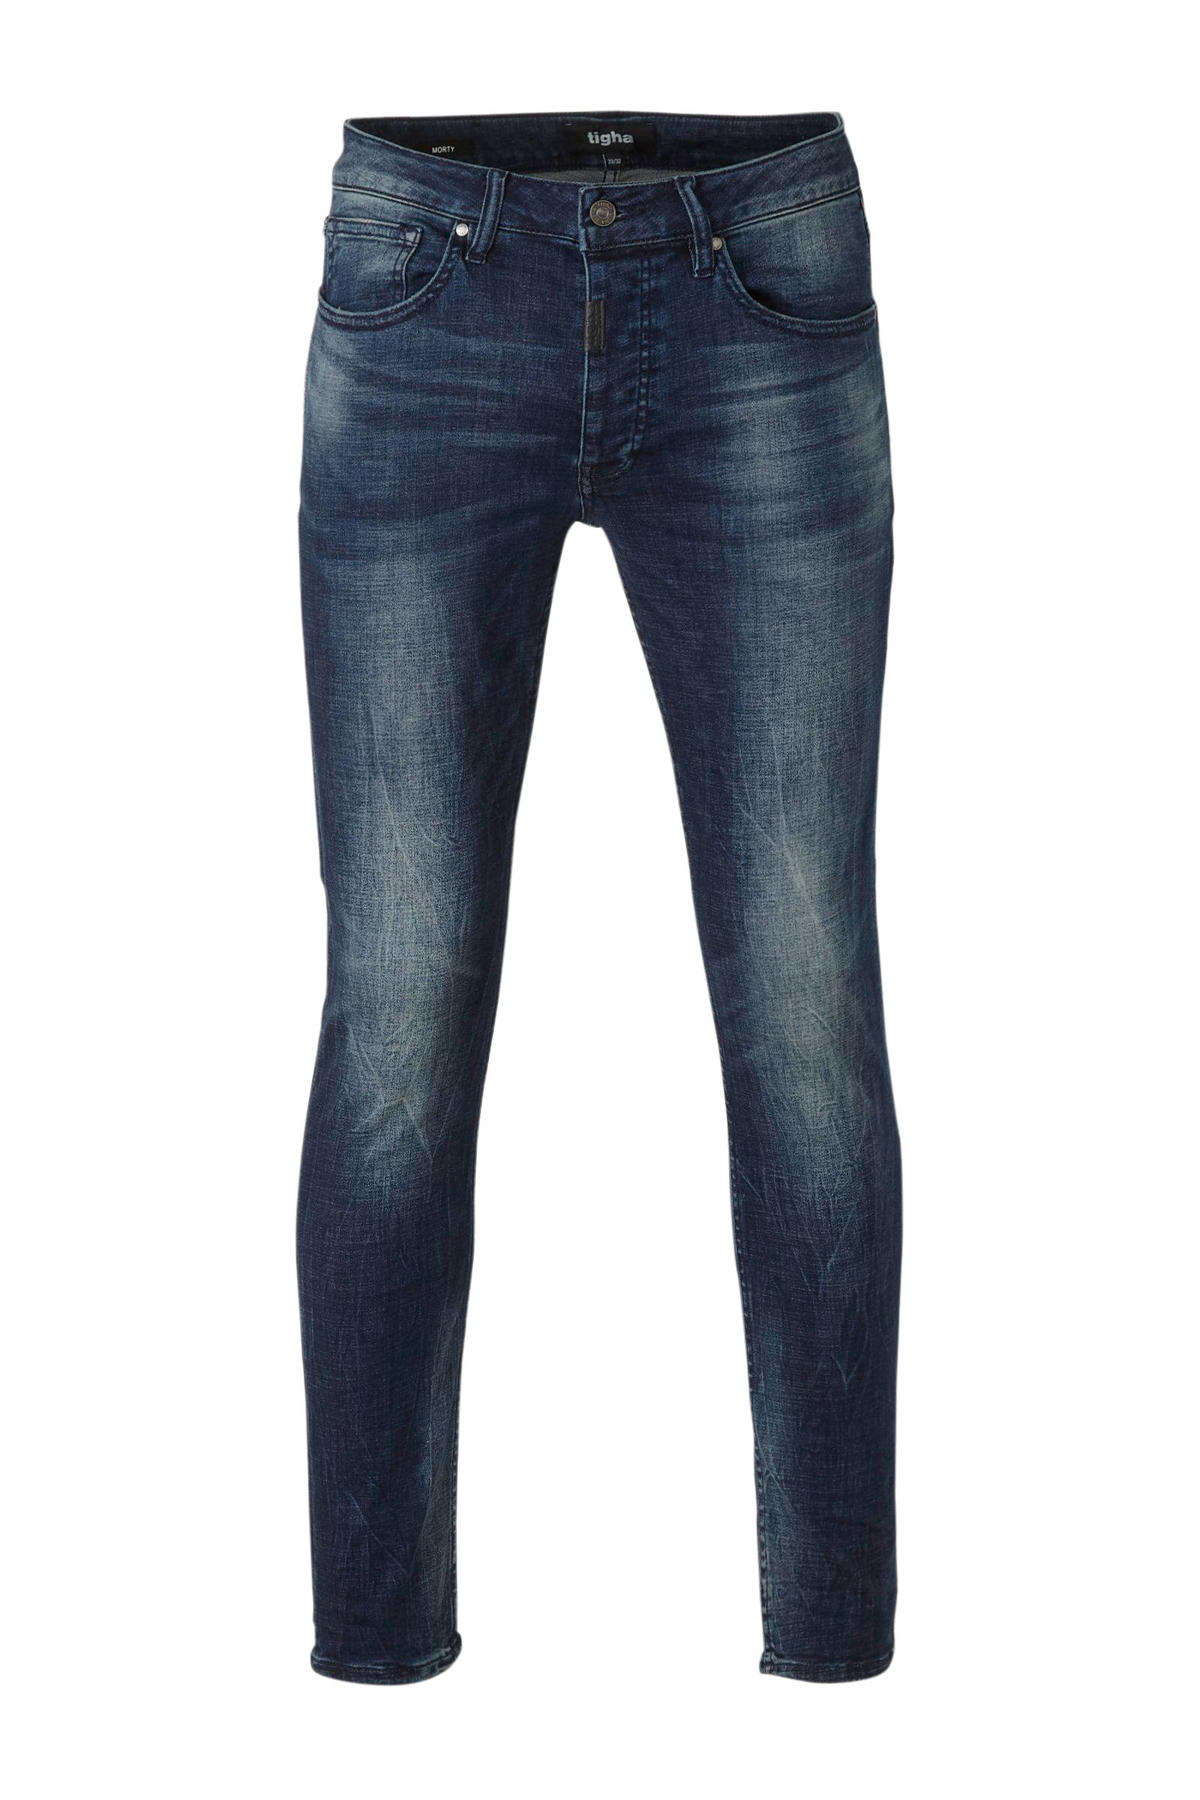 Ellende Zwerver Riet Tigha slim fit jeans Morty 522 mid blue | wehkamp